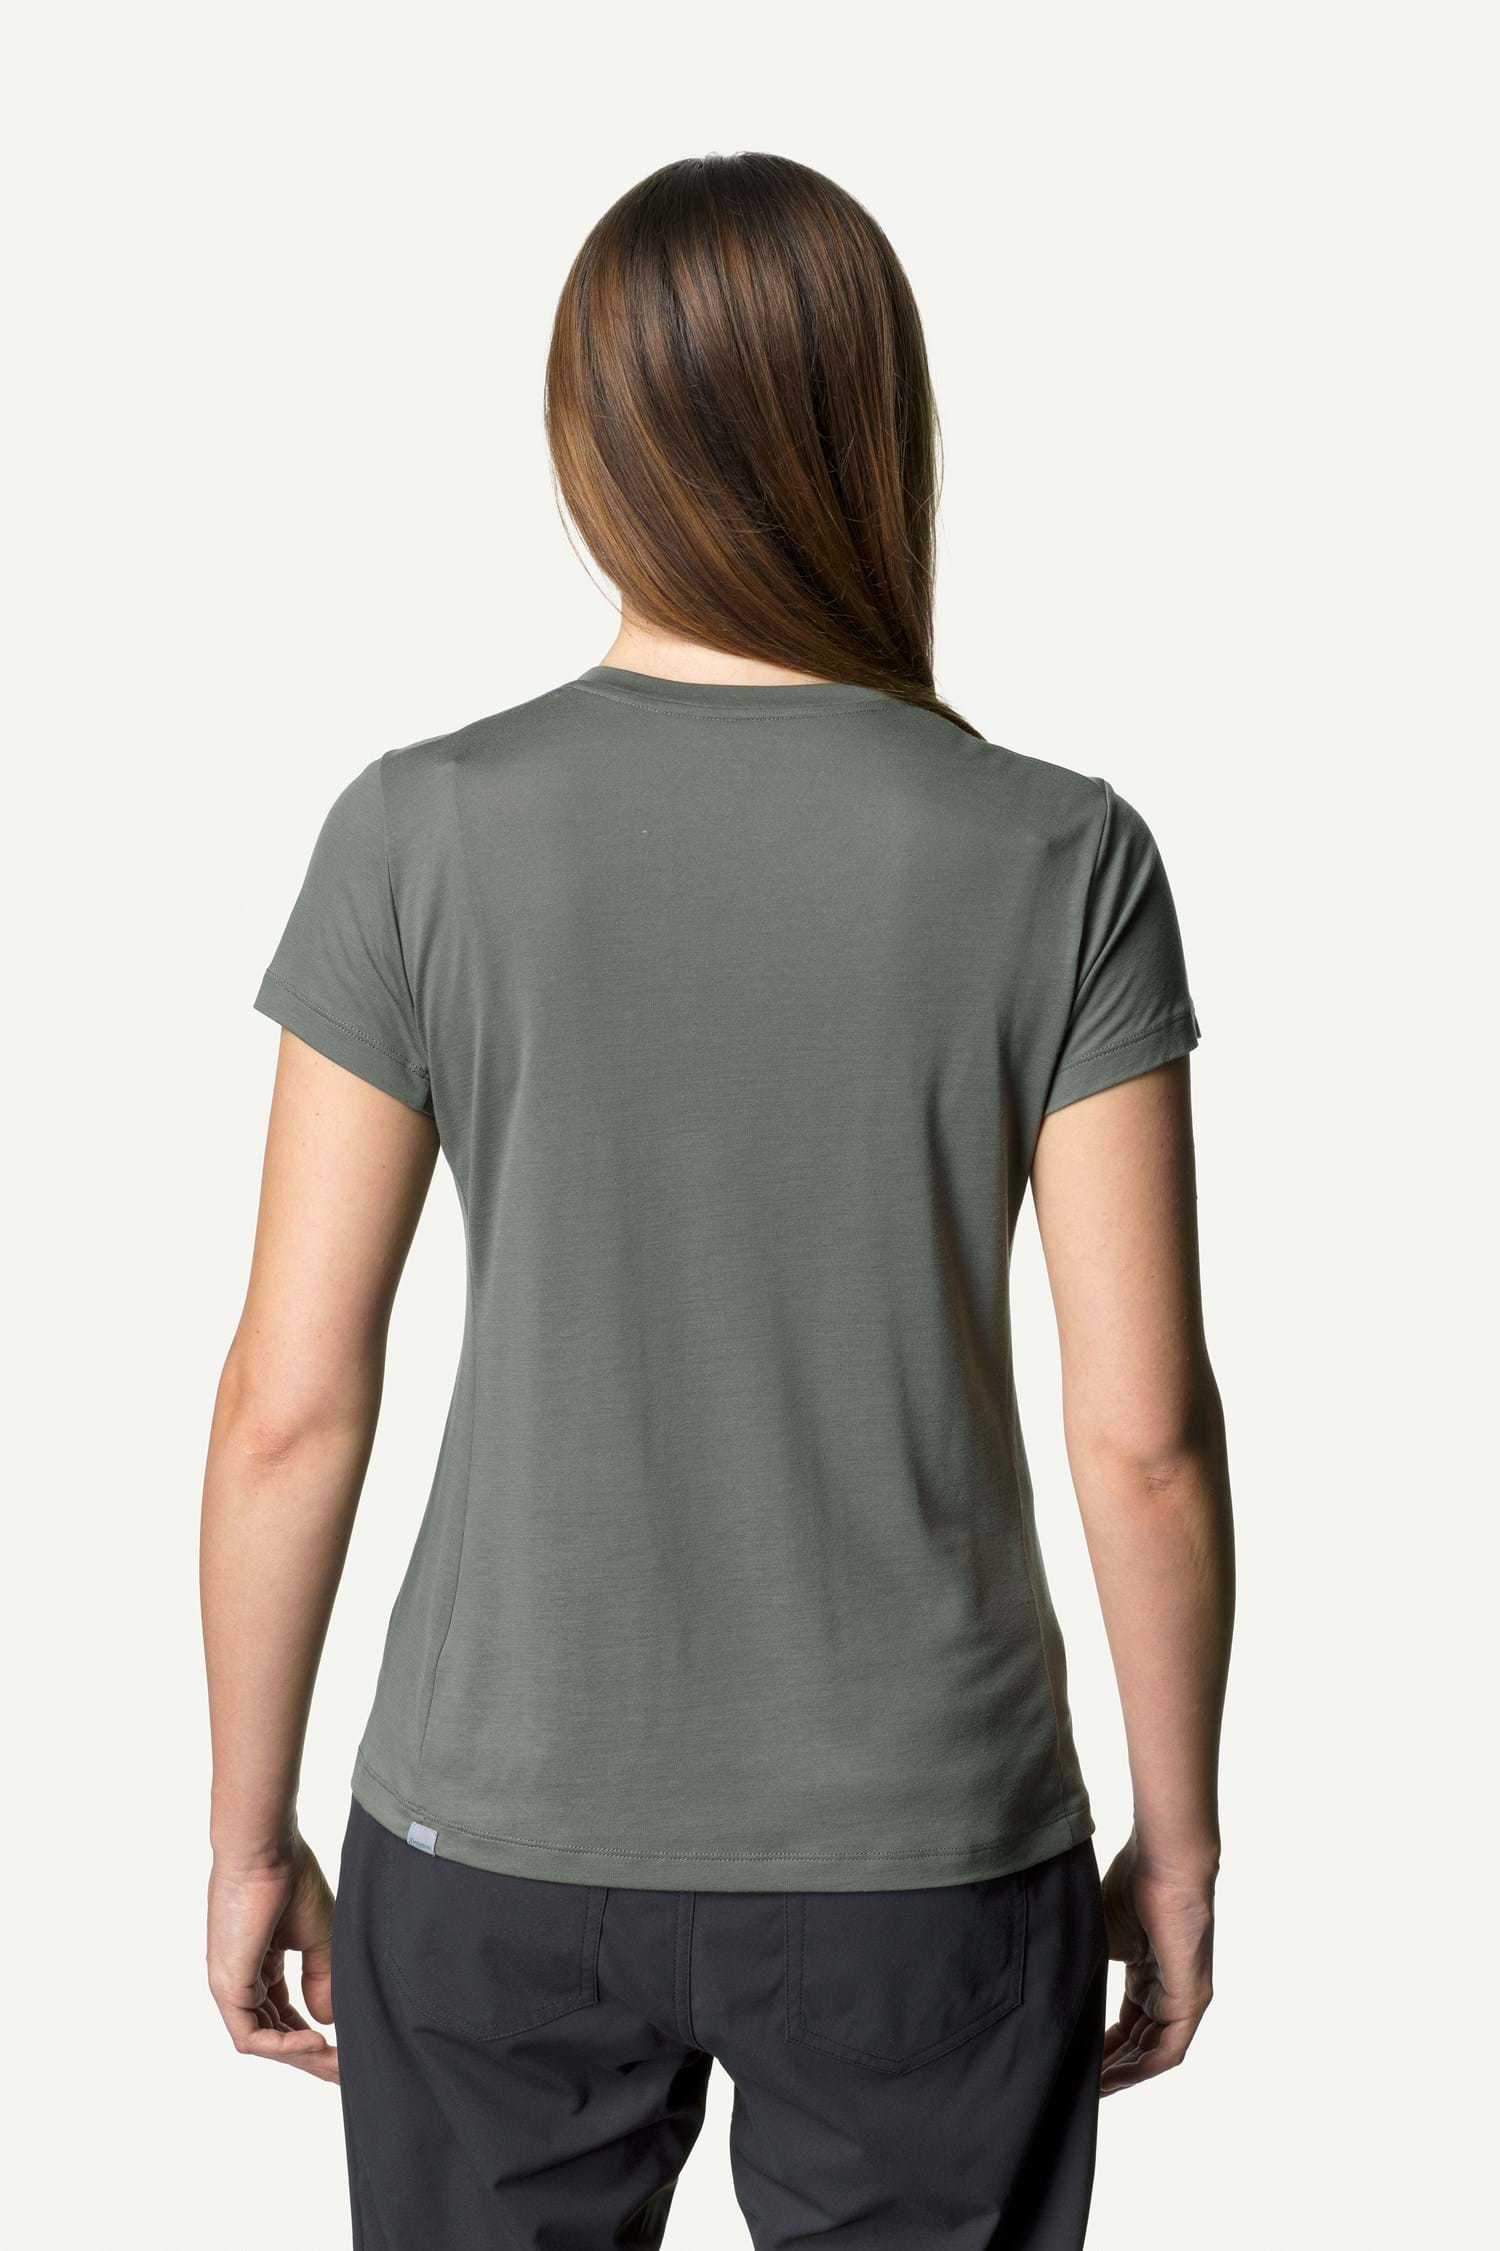 Women's round Neck Short SleeveTT-shirt Summer New Outdoor Cotton Innerwear  Bottoming Shirt Pure Color Comfort Breathable Top